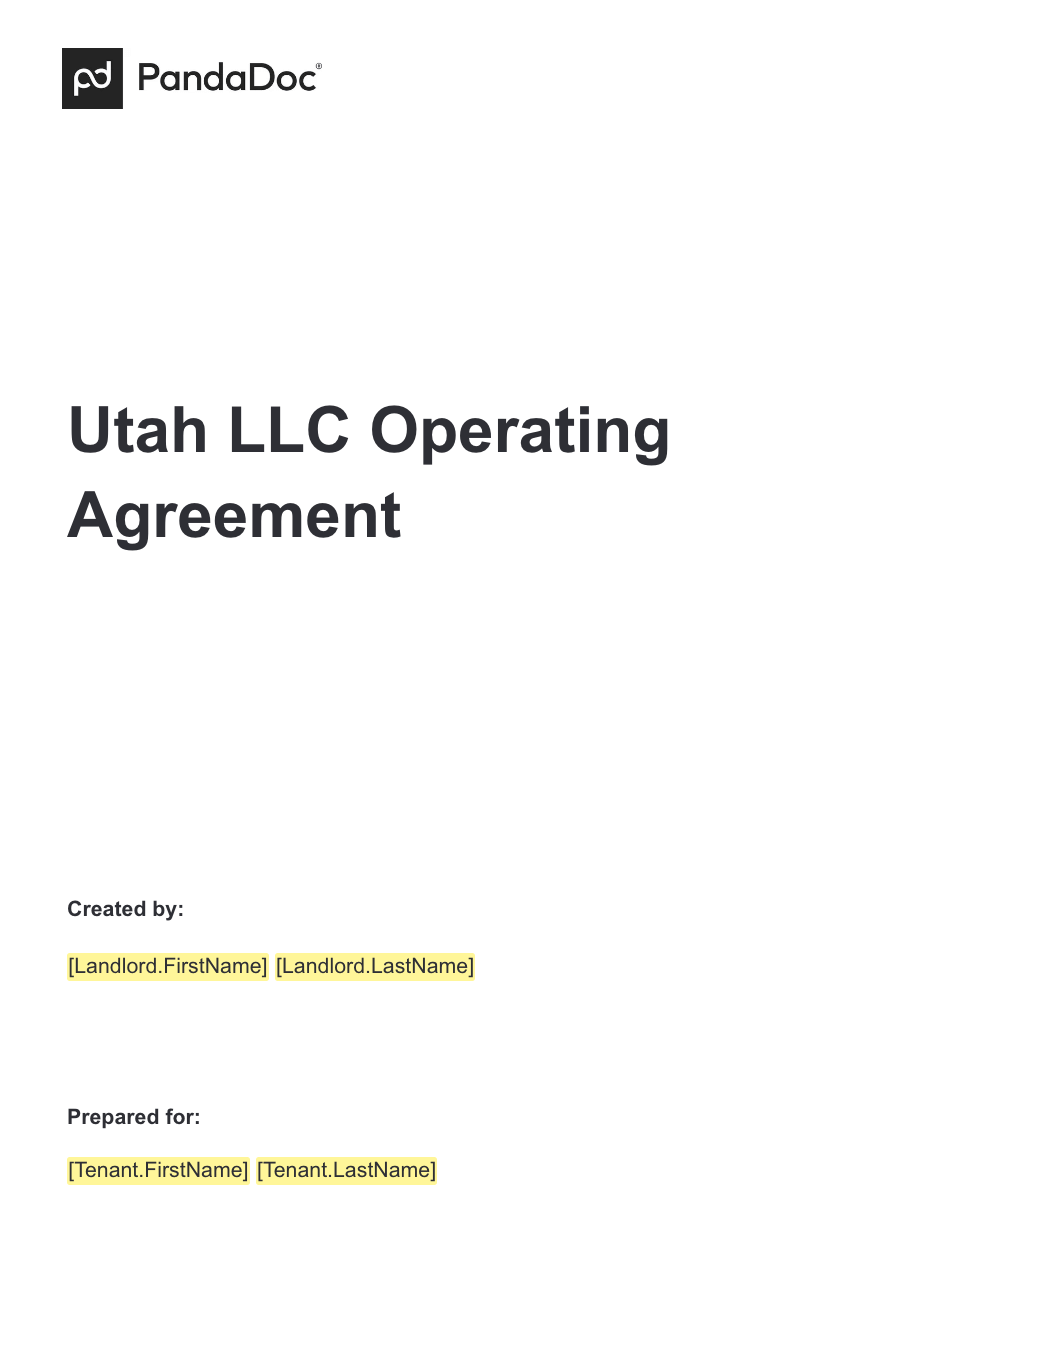 Utah LLC Operating Agreements